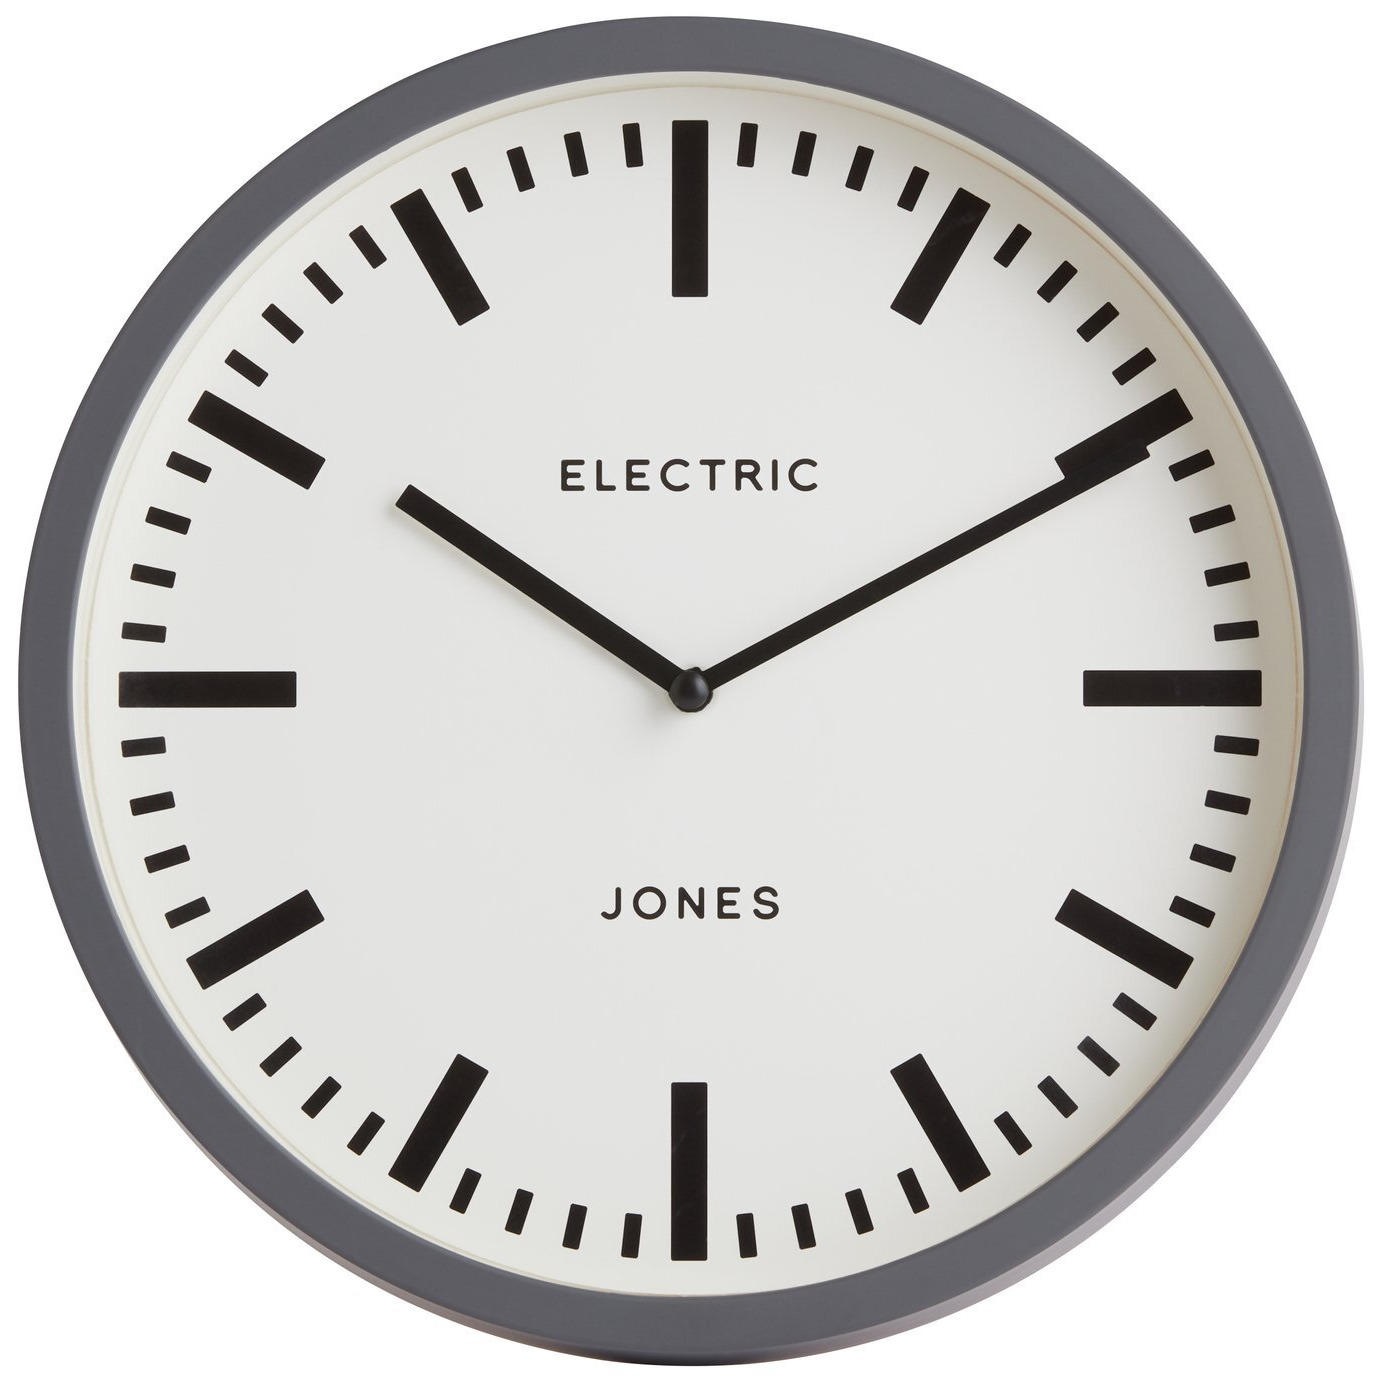 Jones Electric Wall Clock - Grey